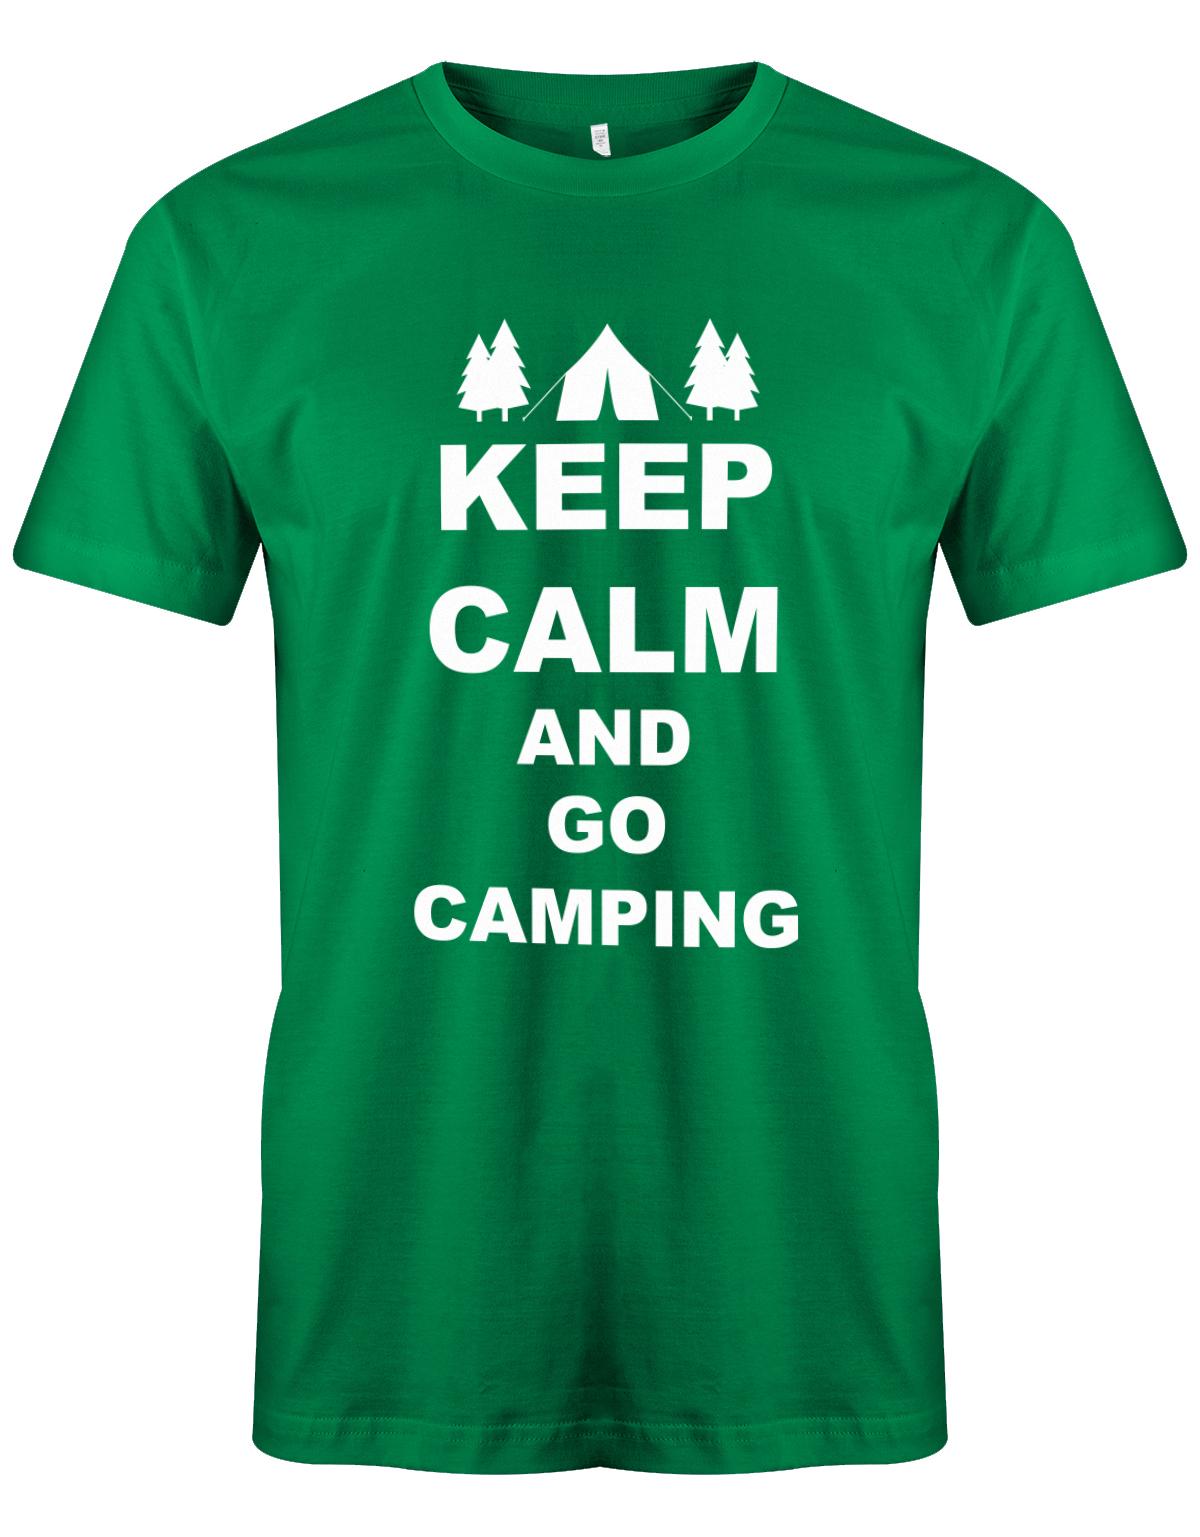 Keep-Calm-and-Go-Camping-Herren-Shirt-gr-n